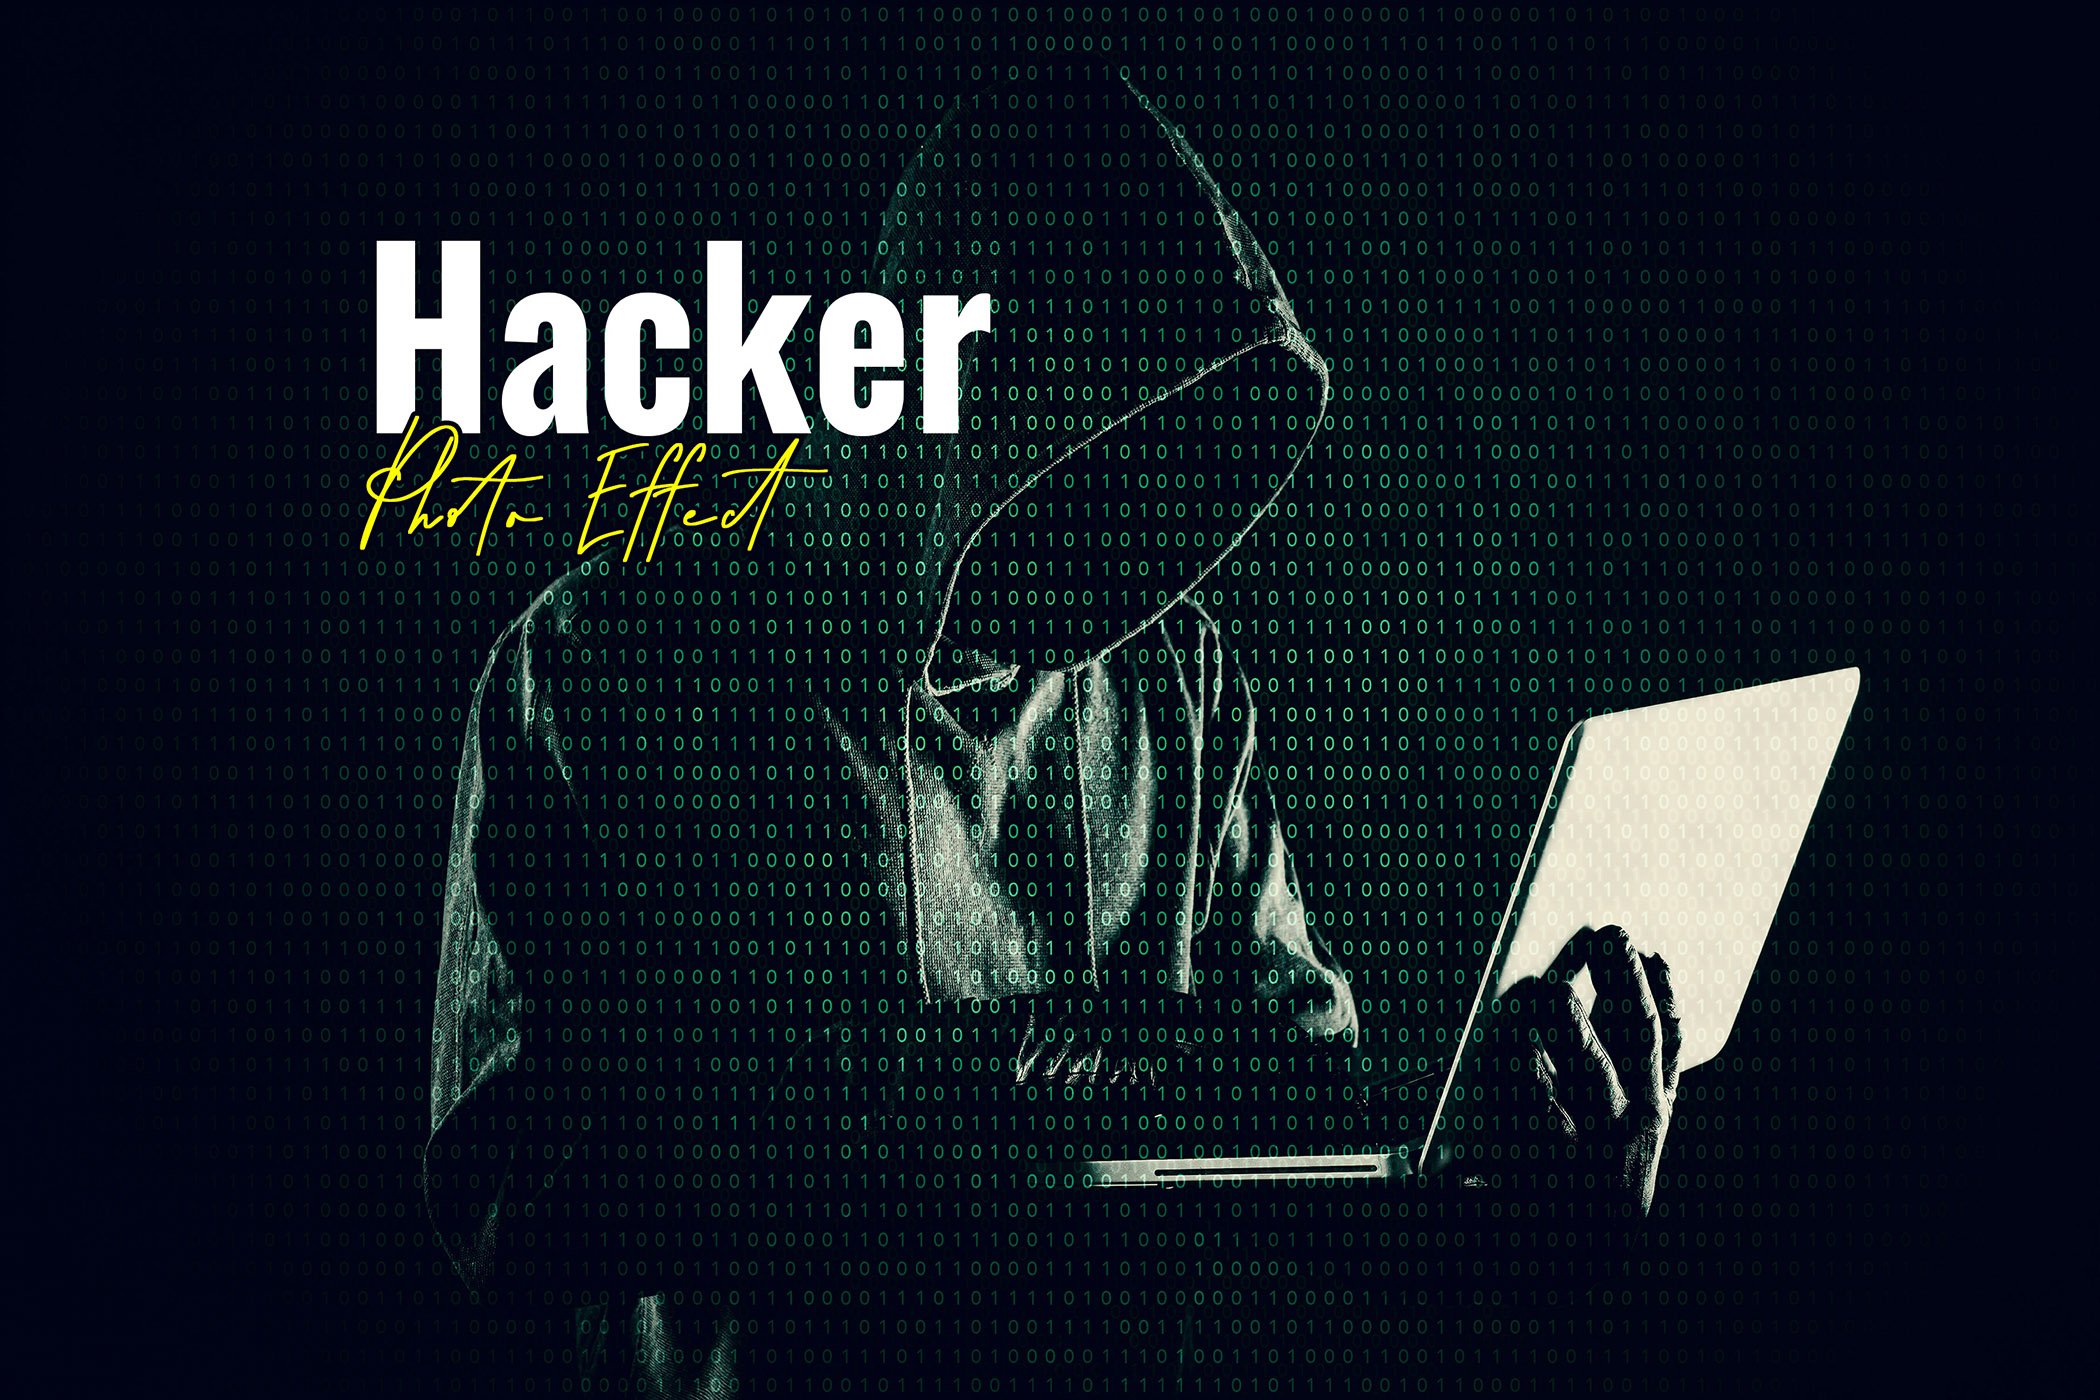 Hacker Matrix Photo Effectcover image.